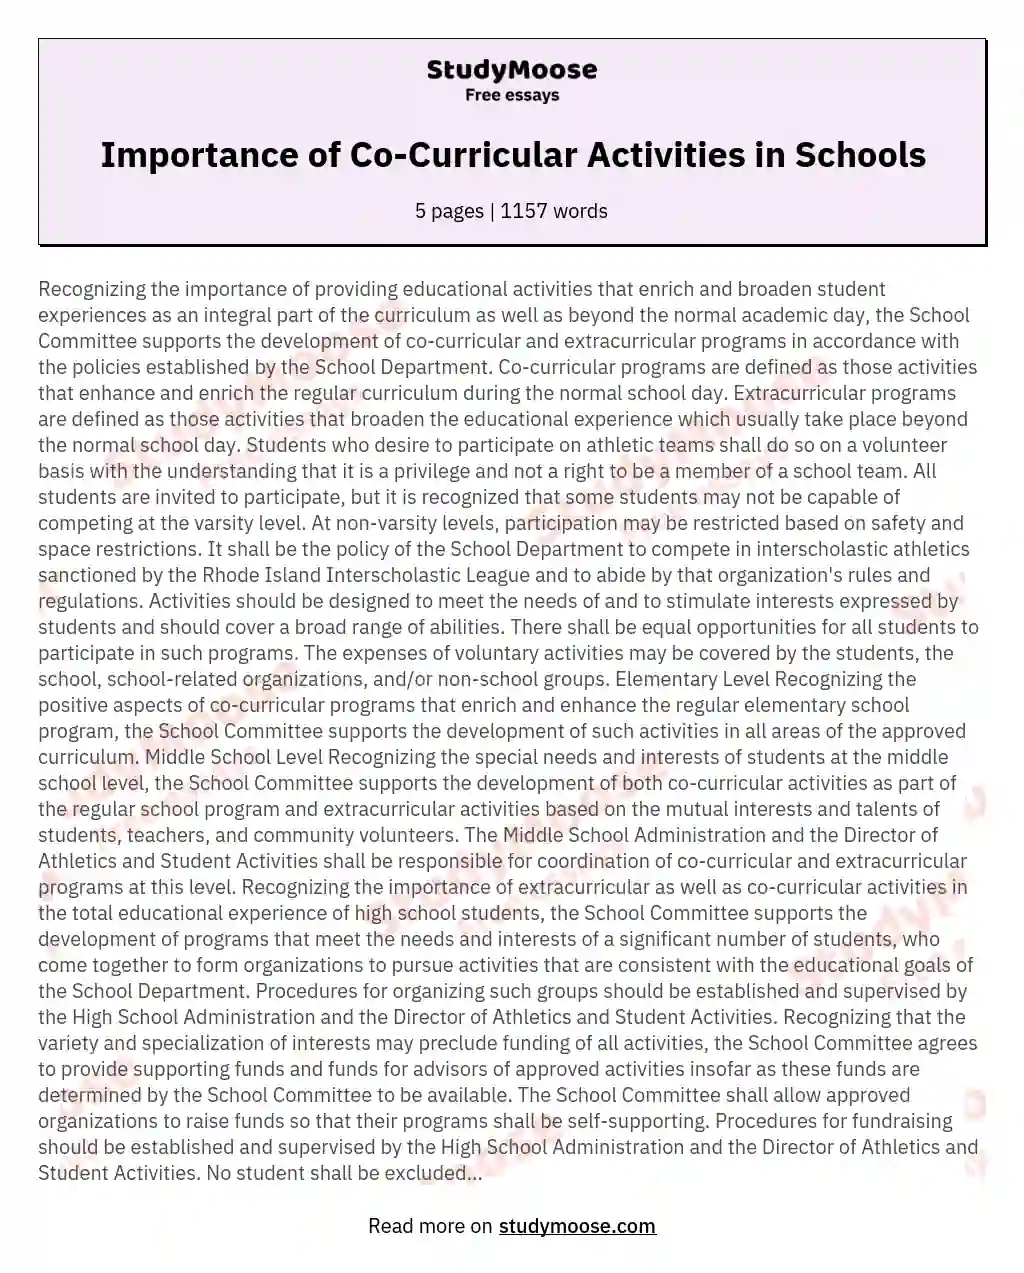 Importance of Co-Curricular Activities in Schools essay